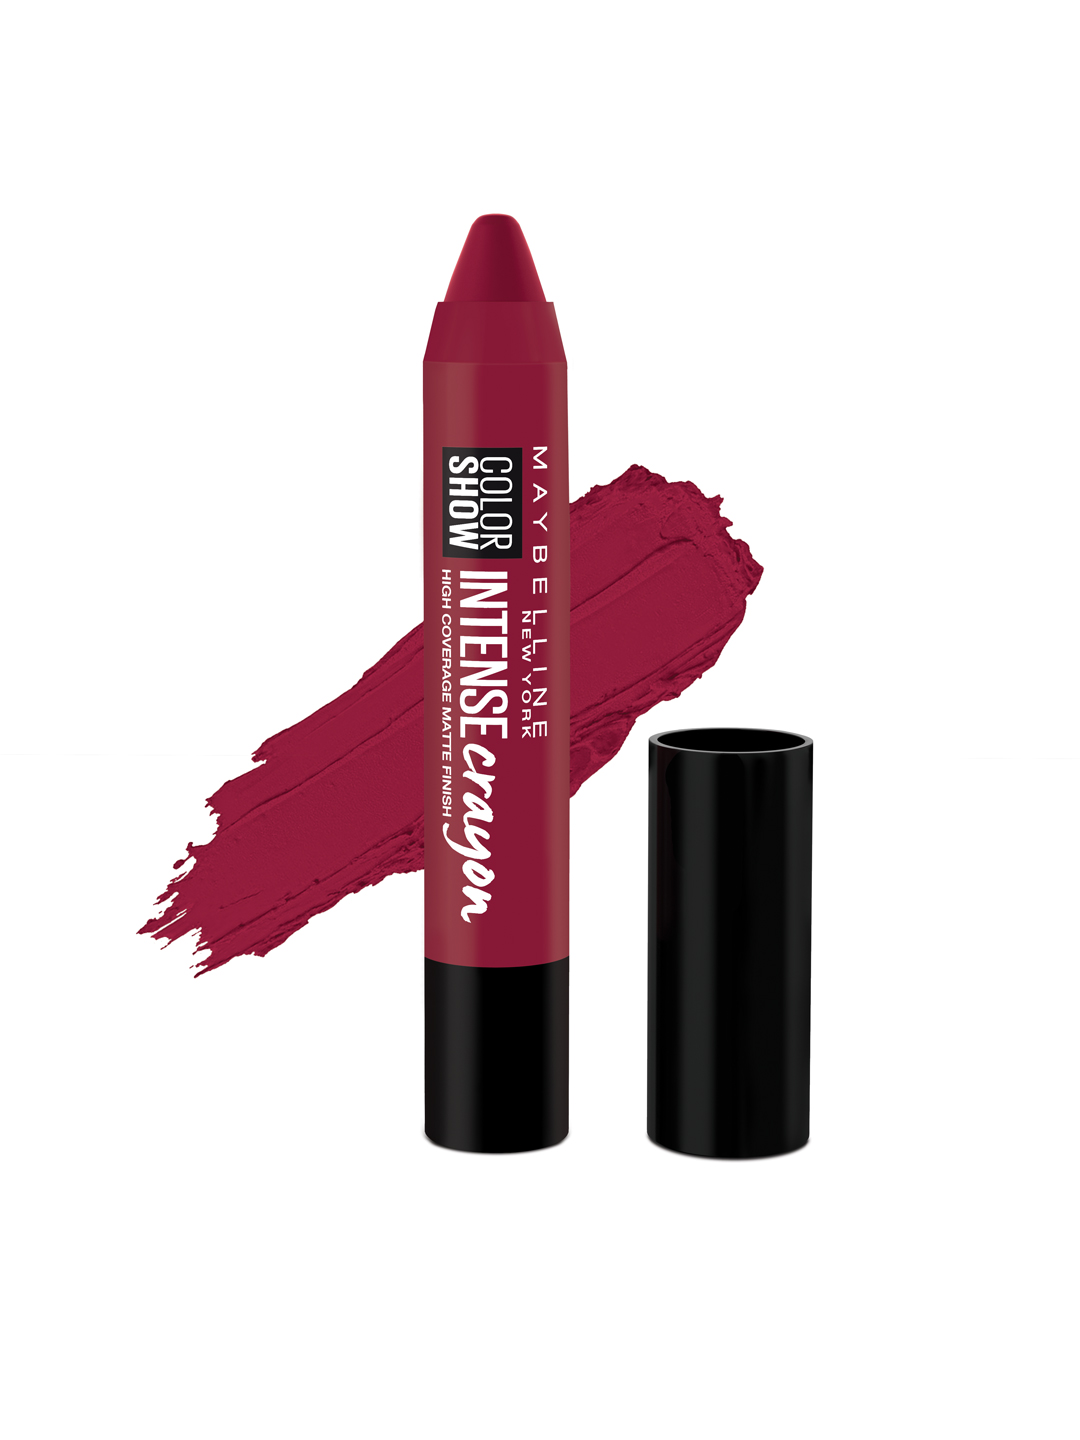 Maybelline Color Show Intense Crayon Passionate Plum Lipstick M 404 Price in India